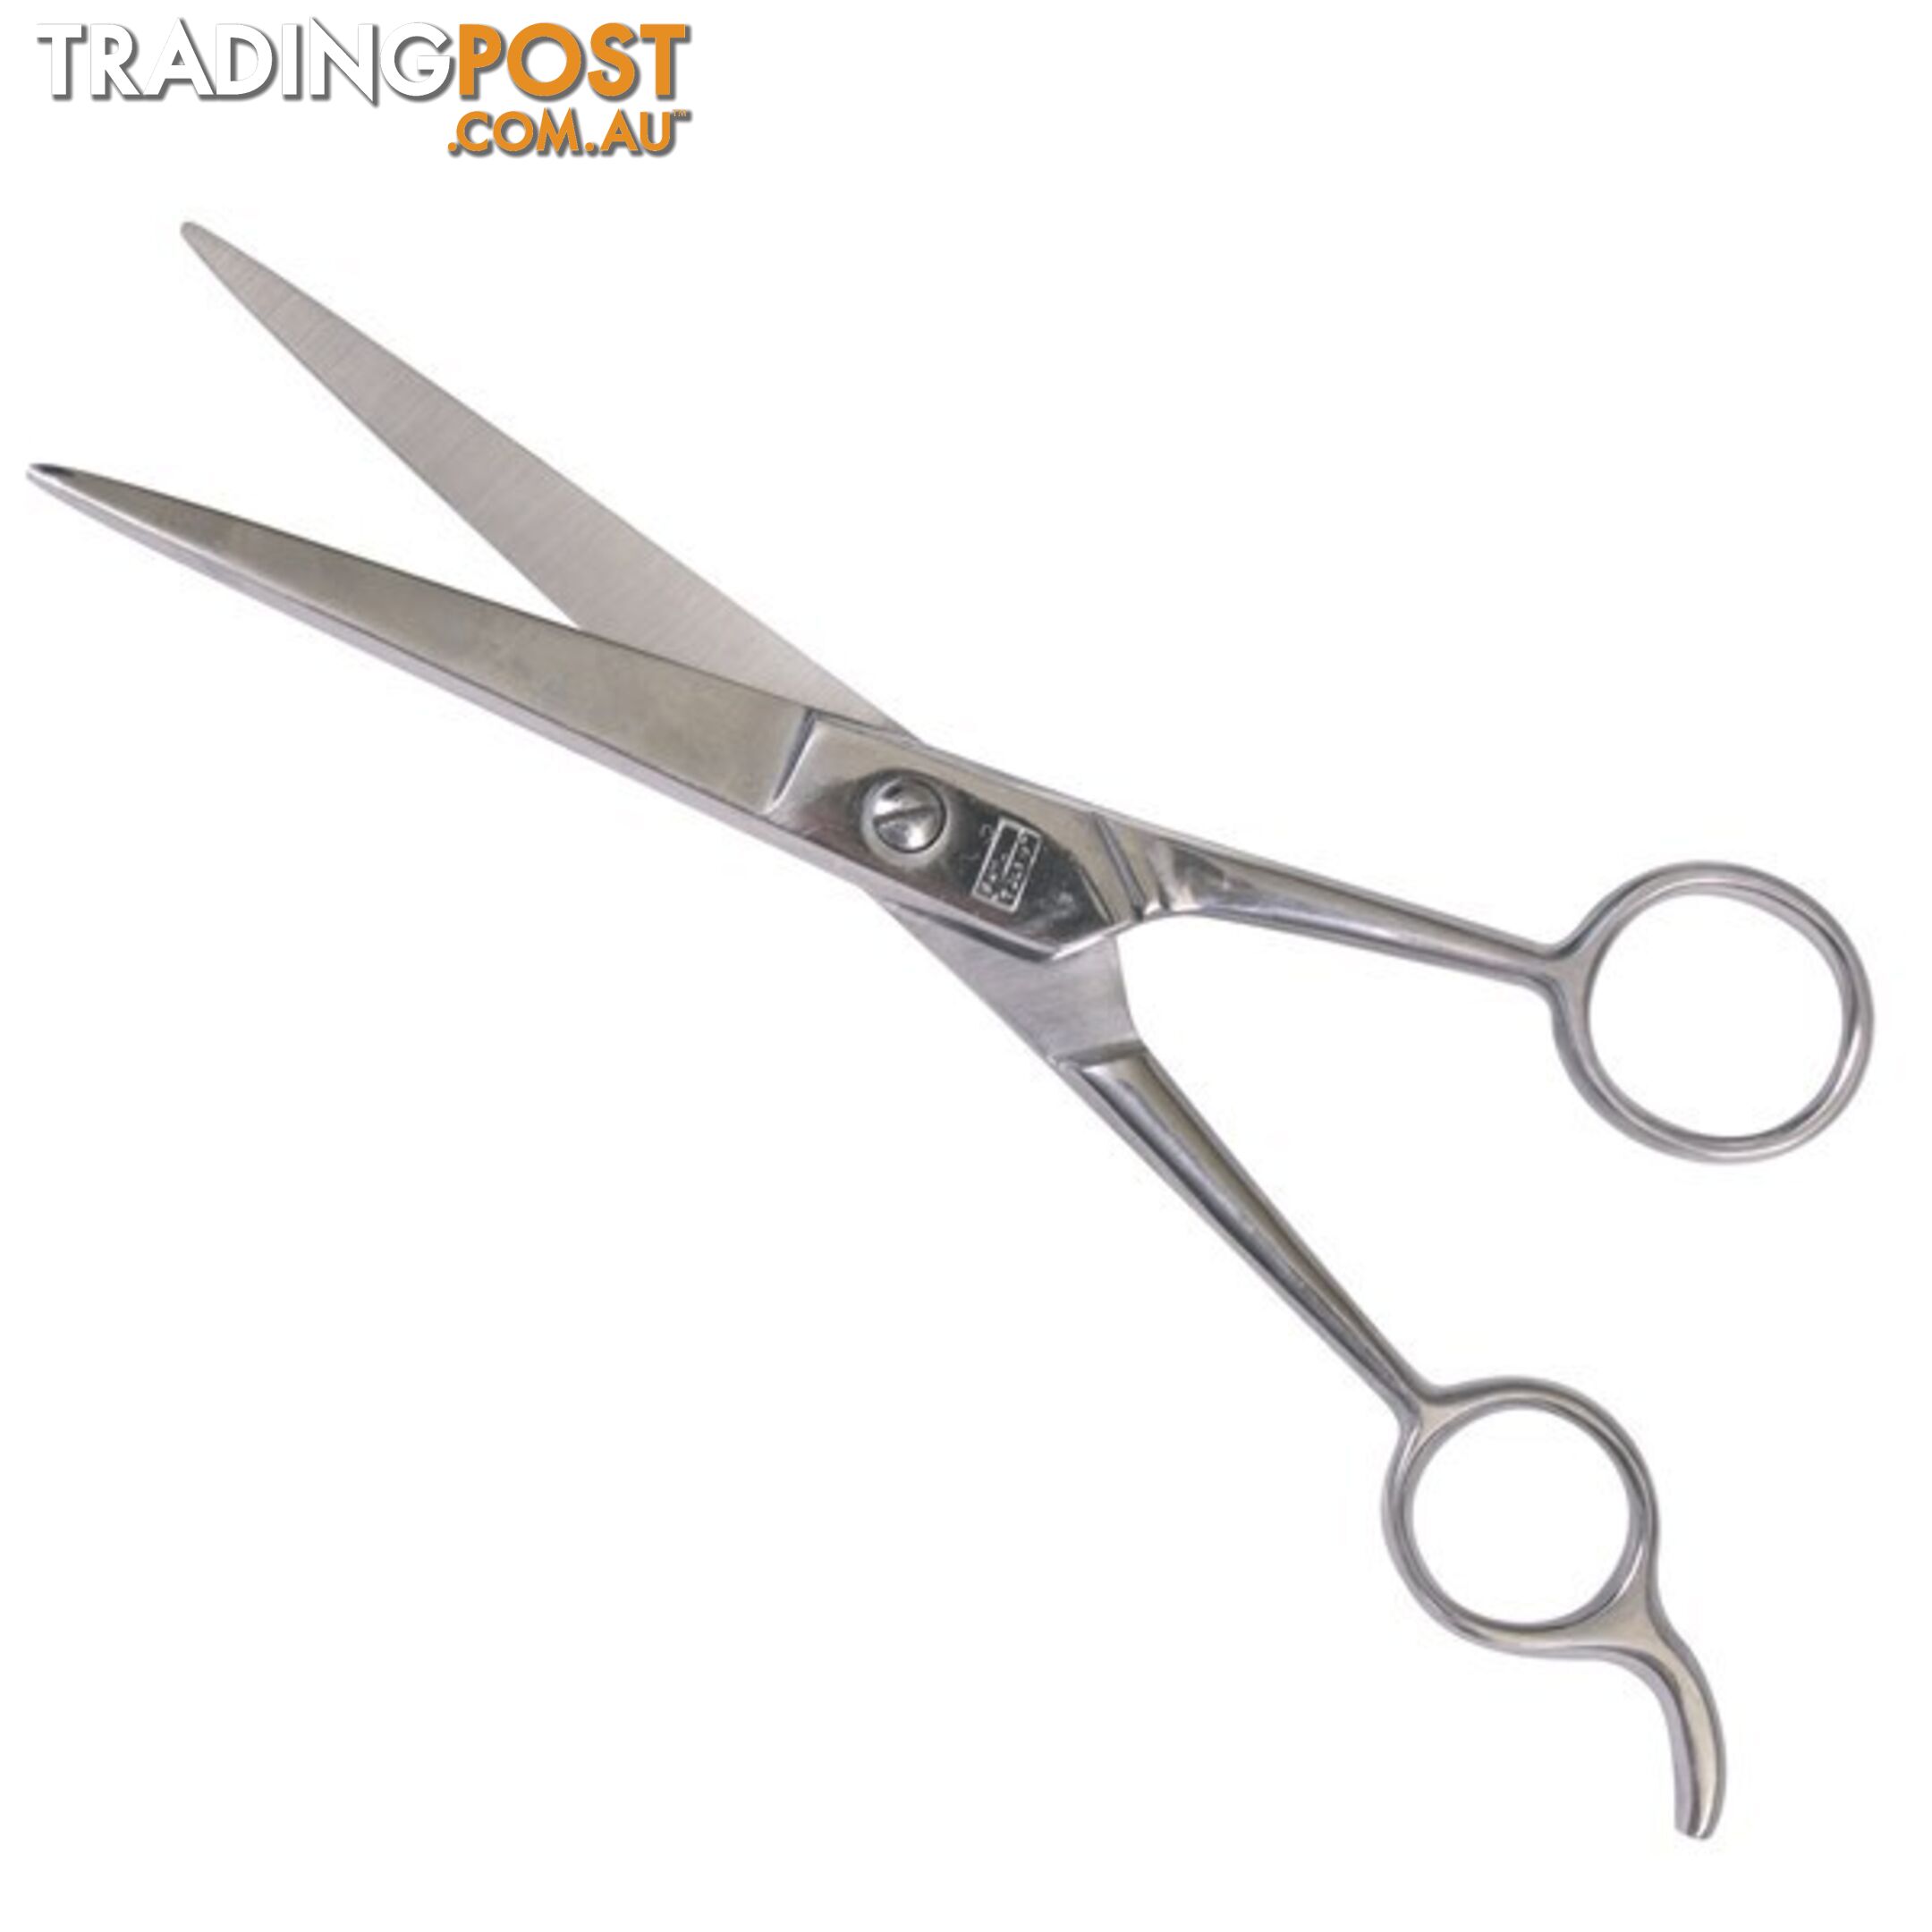 Toledo Hairdresserâs Scissors Blade Length: 75mm Overall Length: 200mm SKU - 36375BU